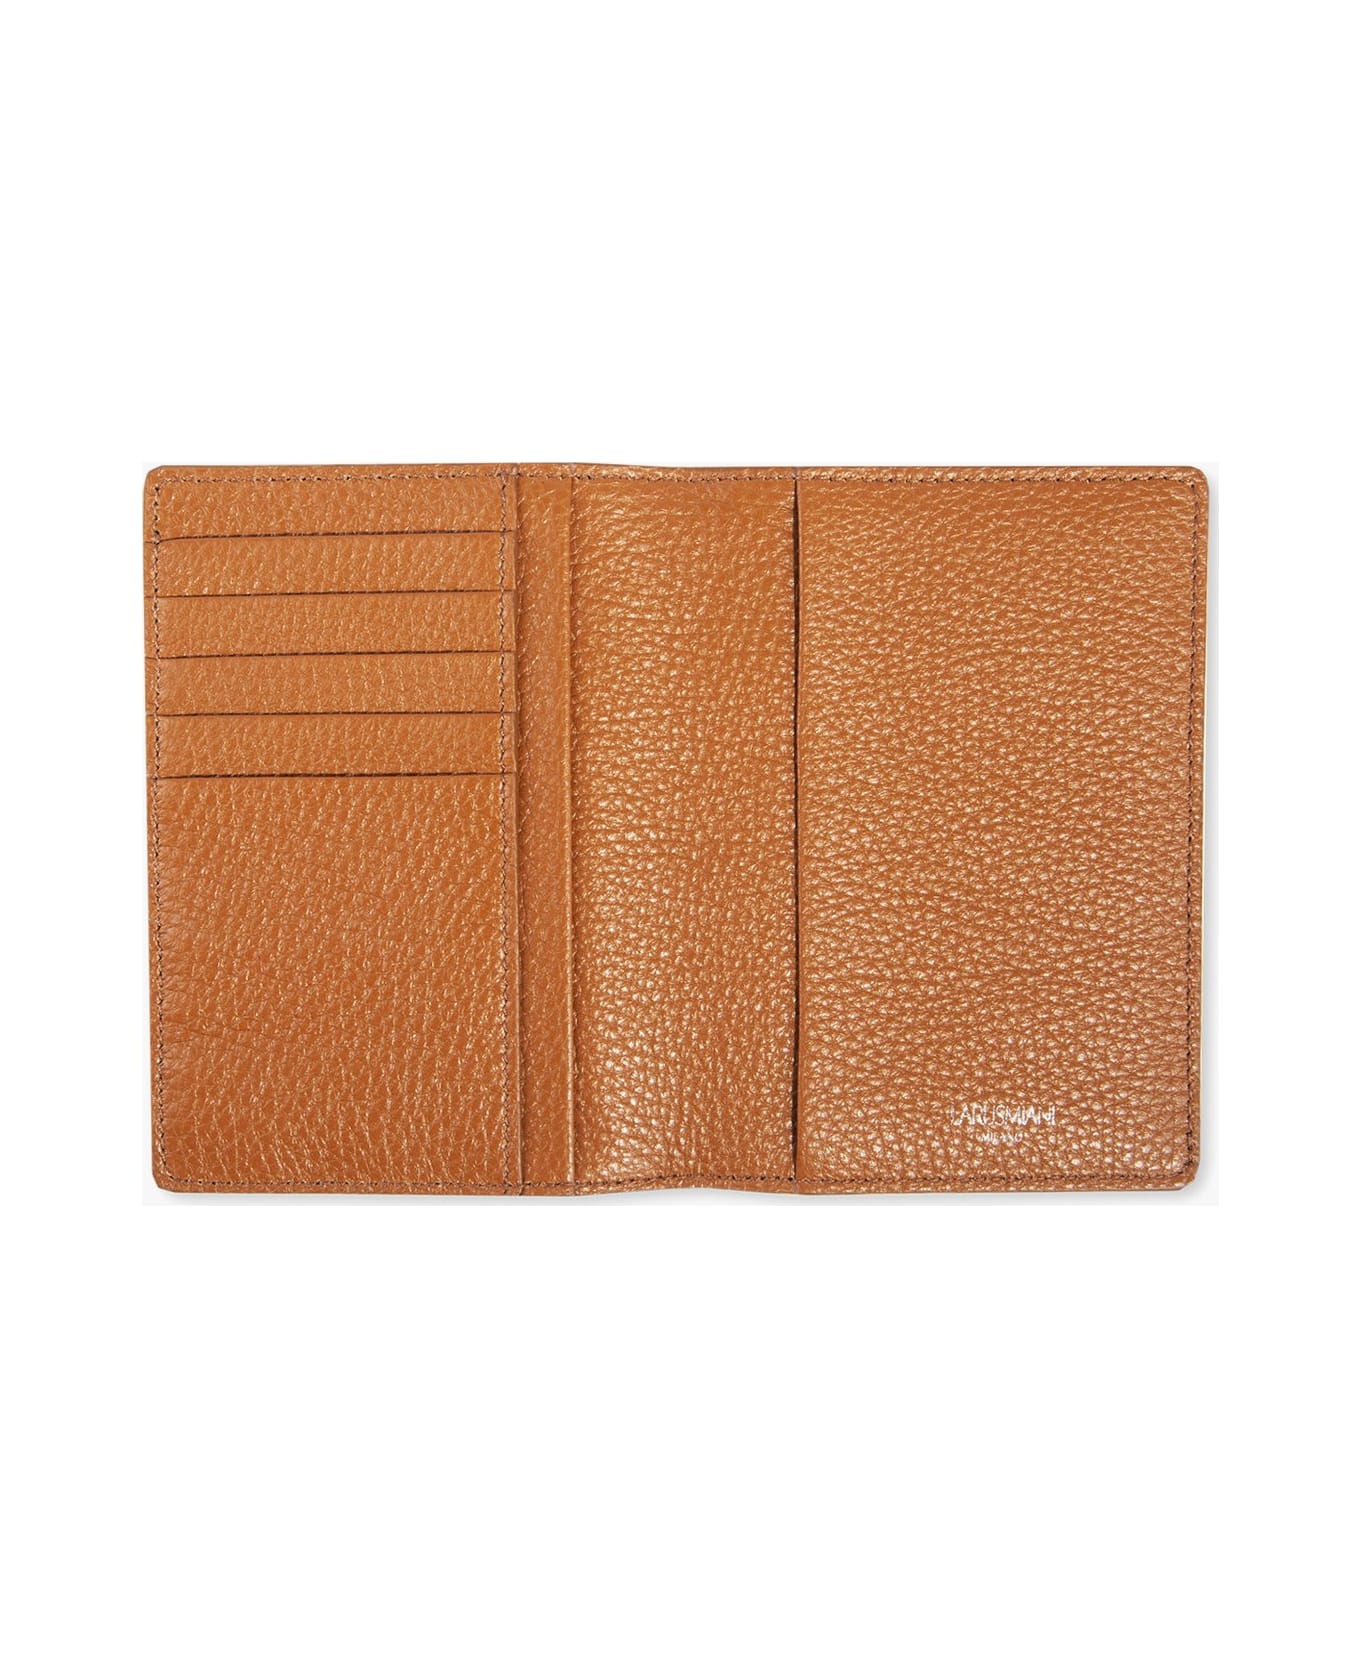 Larusmiani Passport Cover "concorde" - light brown